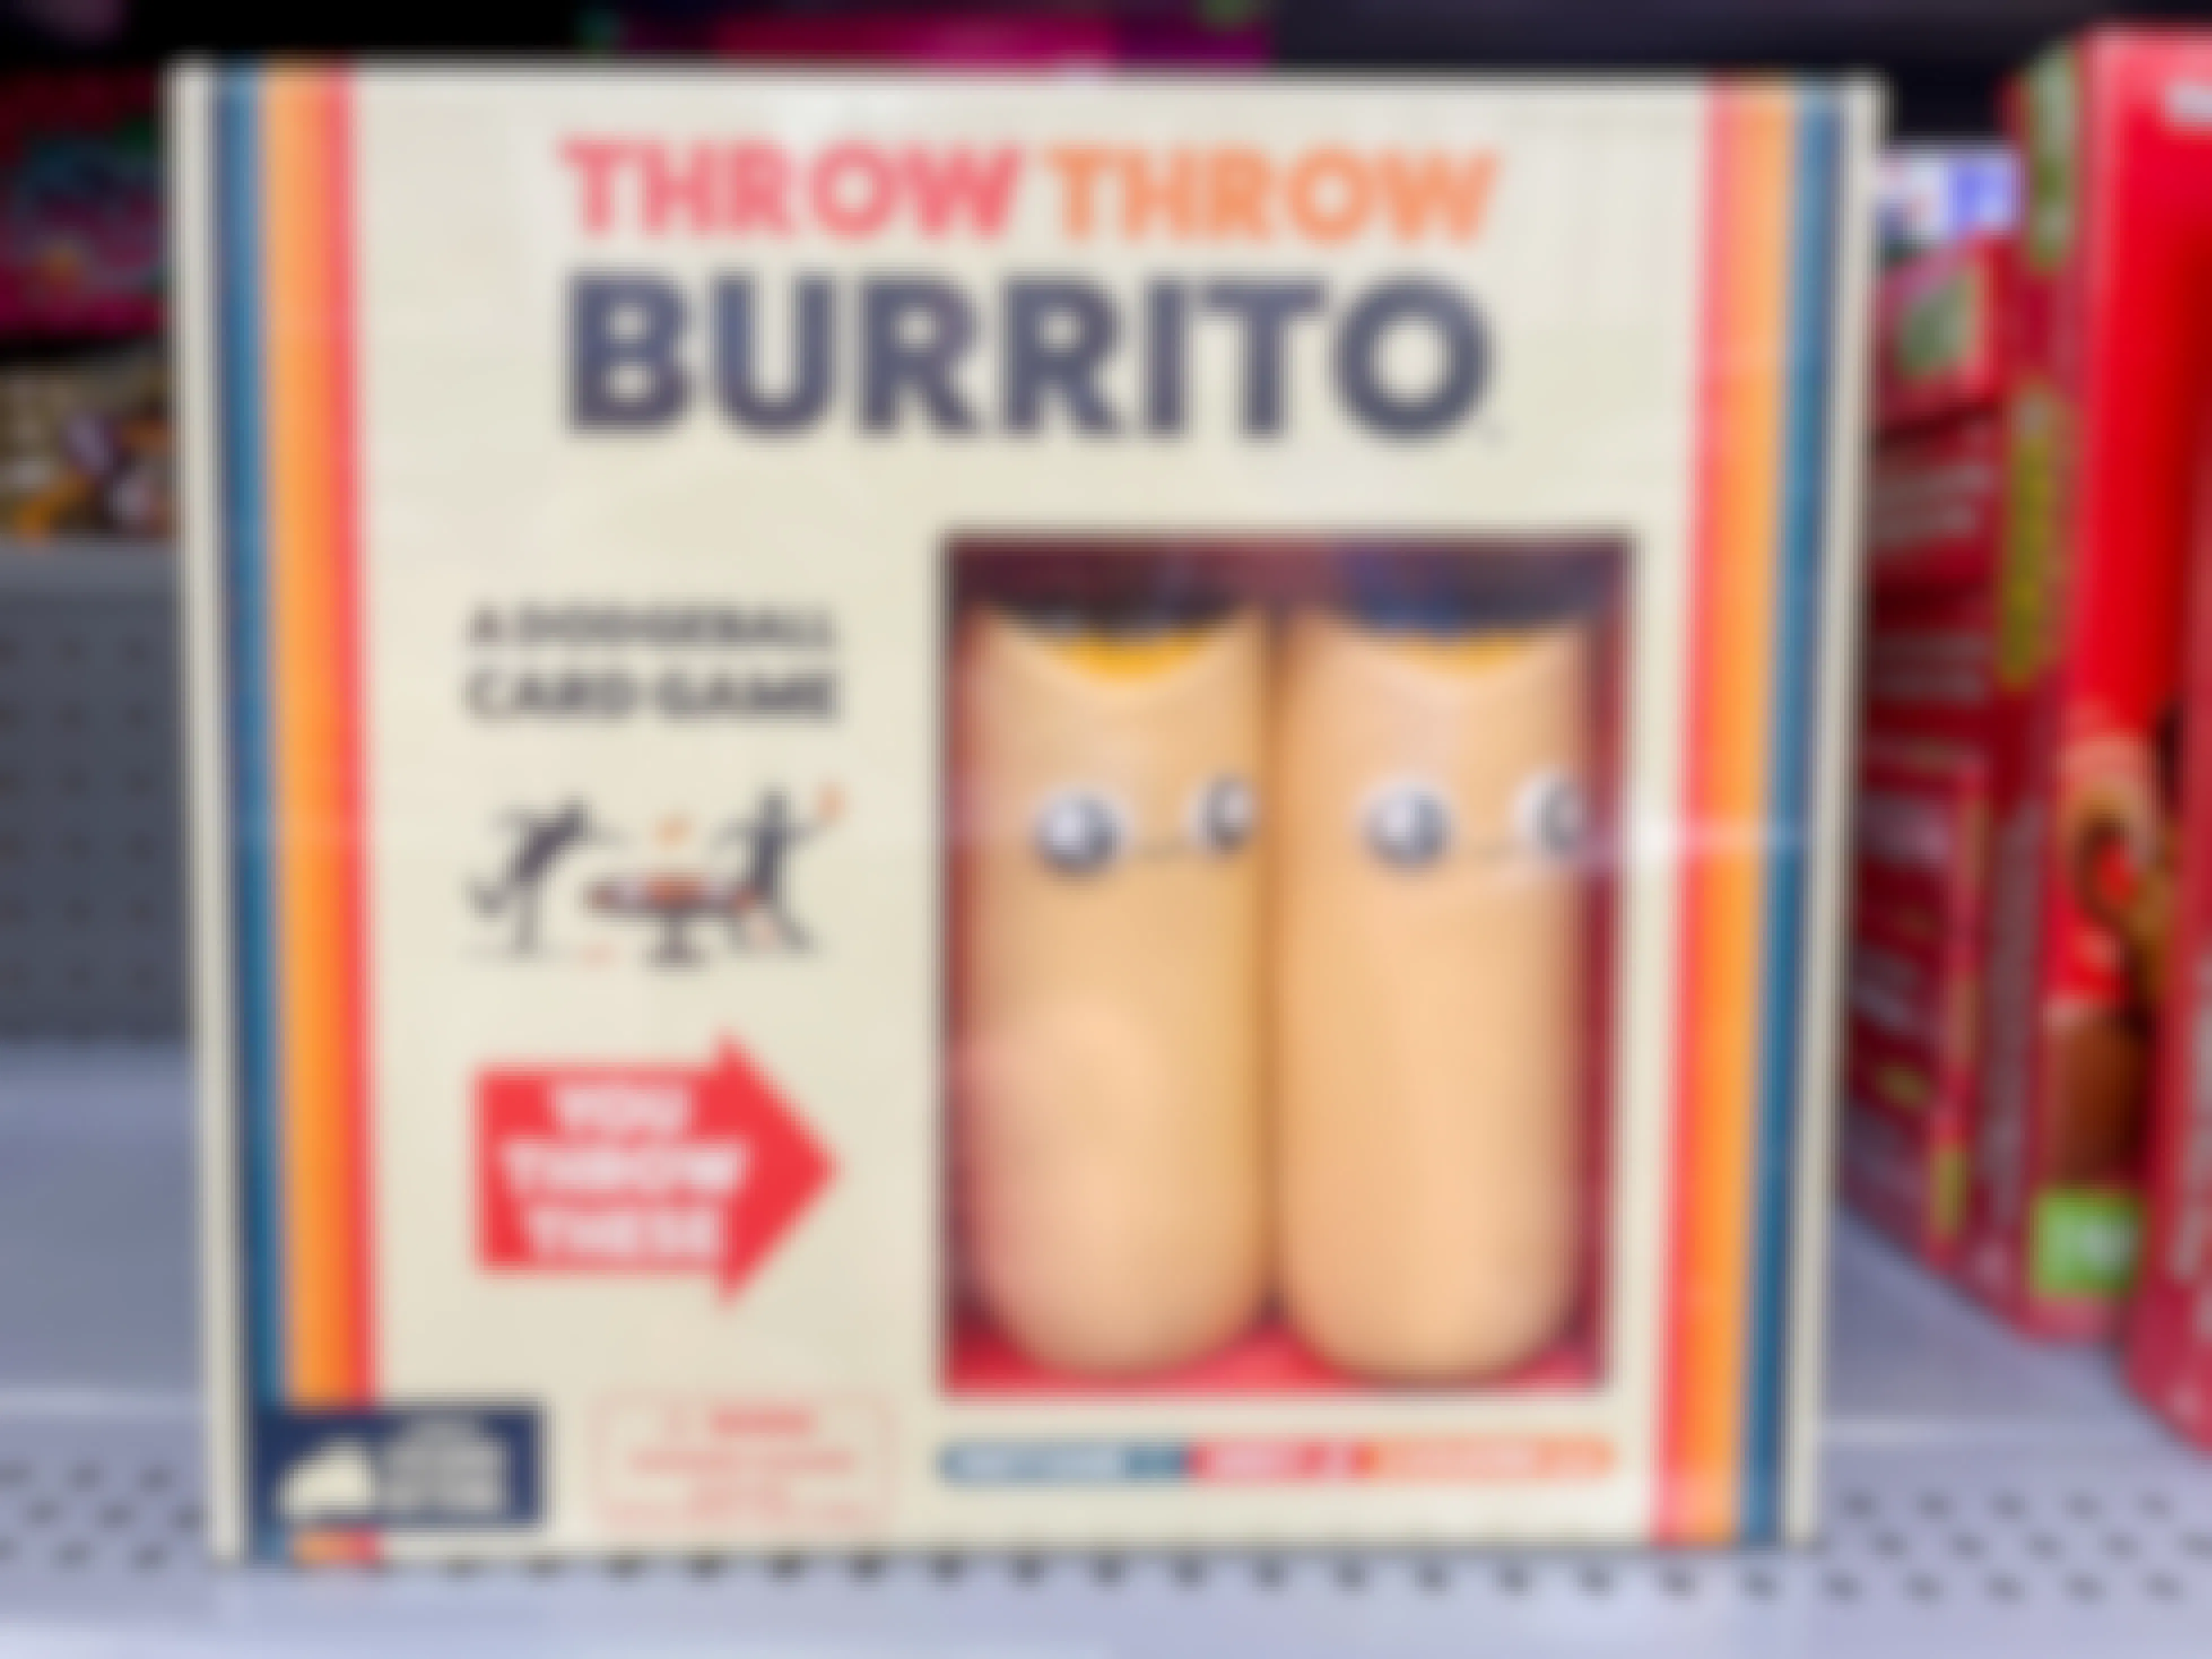 A Throw Throw Burrito game on a shelf.